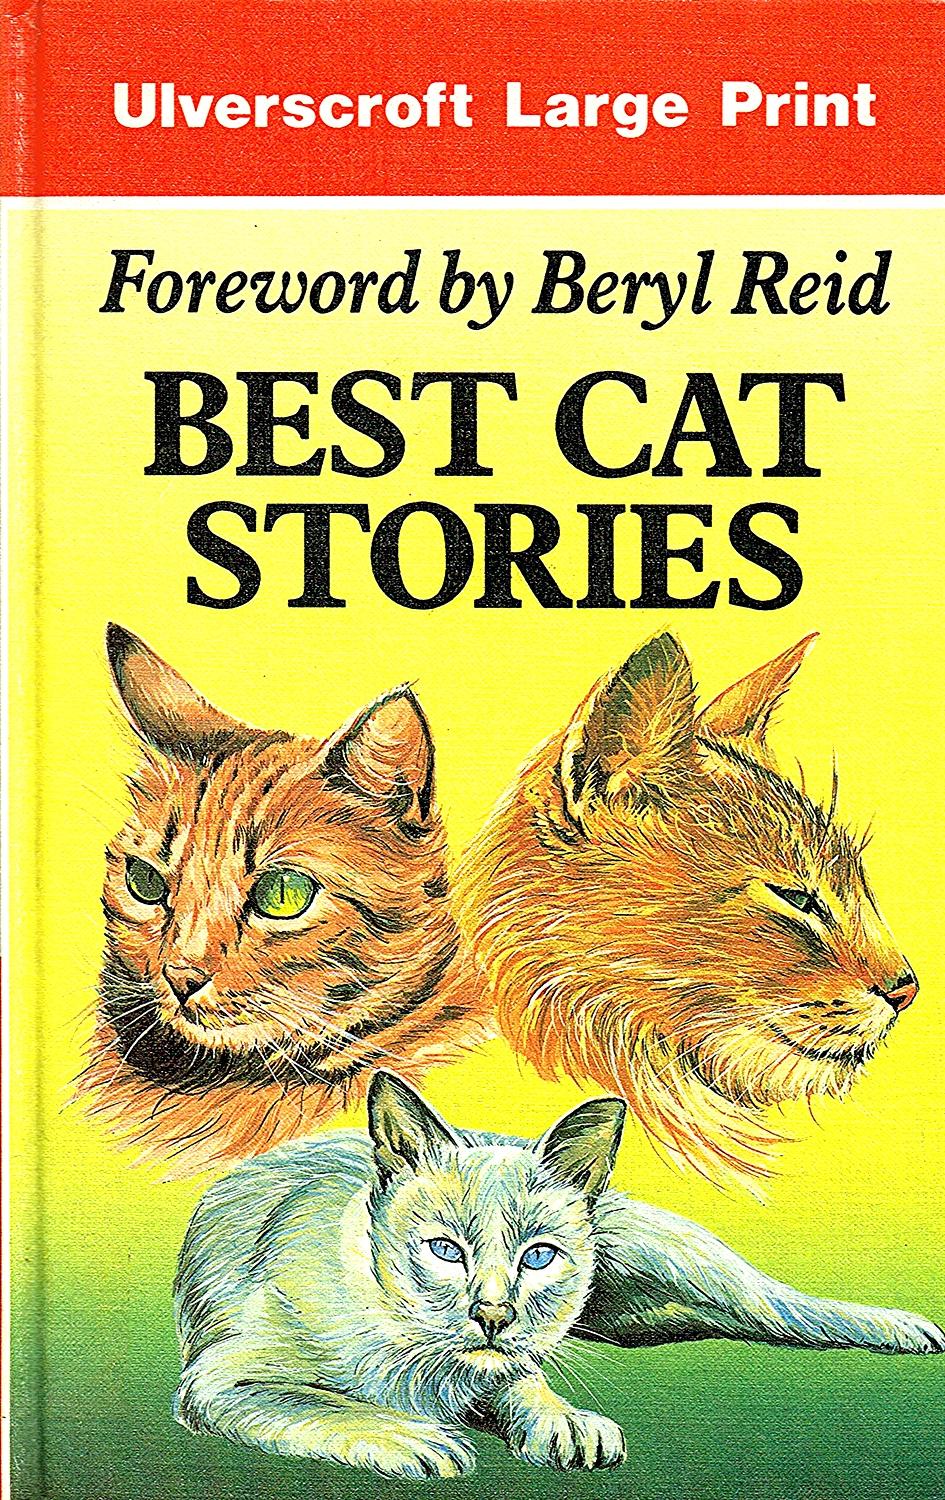 The Best Cat Books